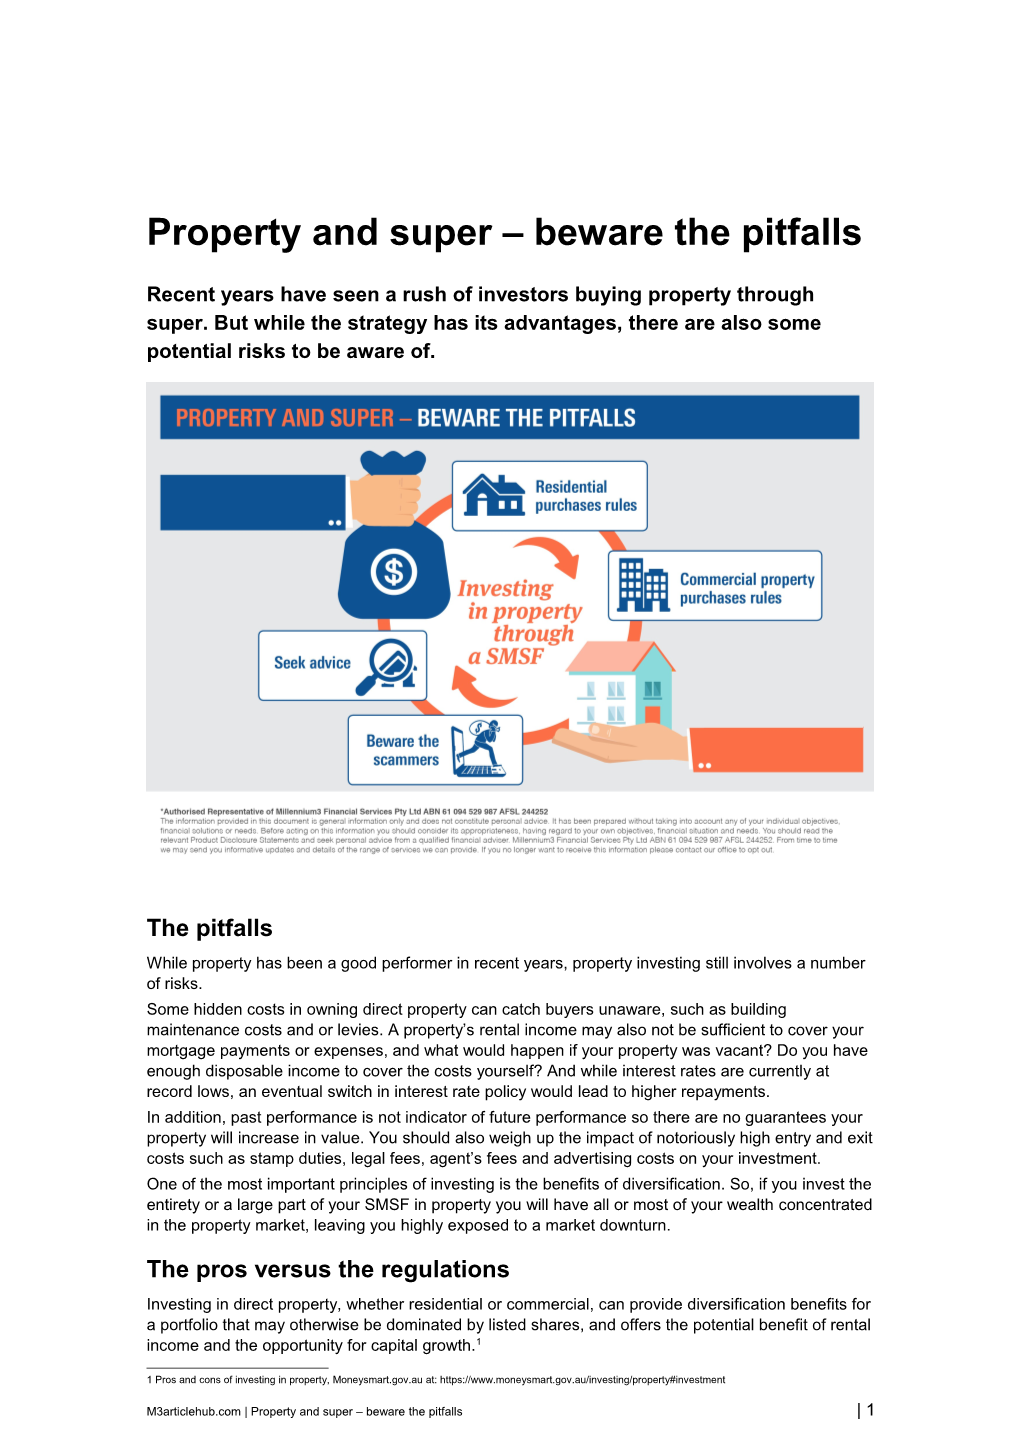 Property and Super Beware the Pitfalls